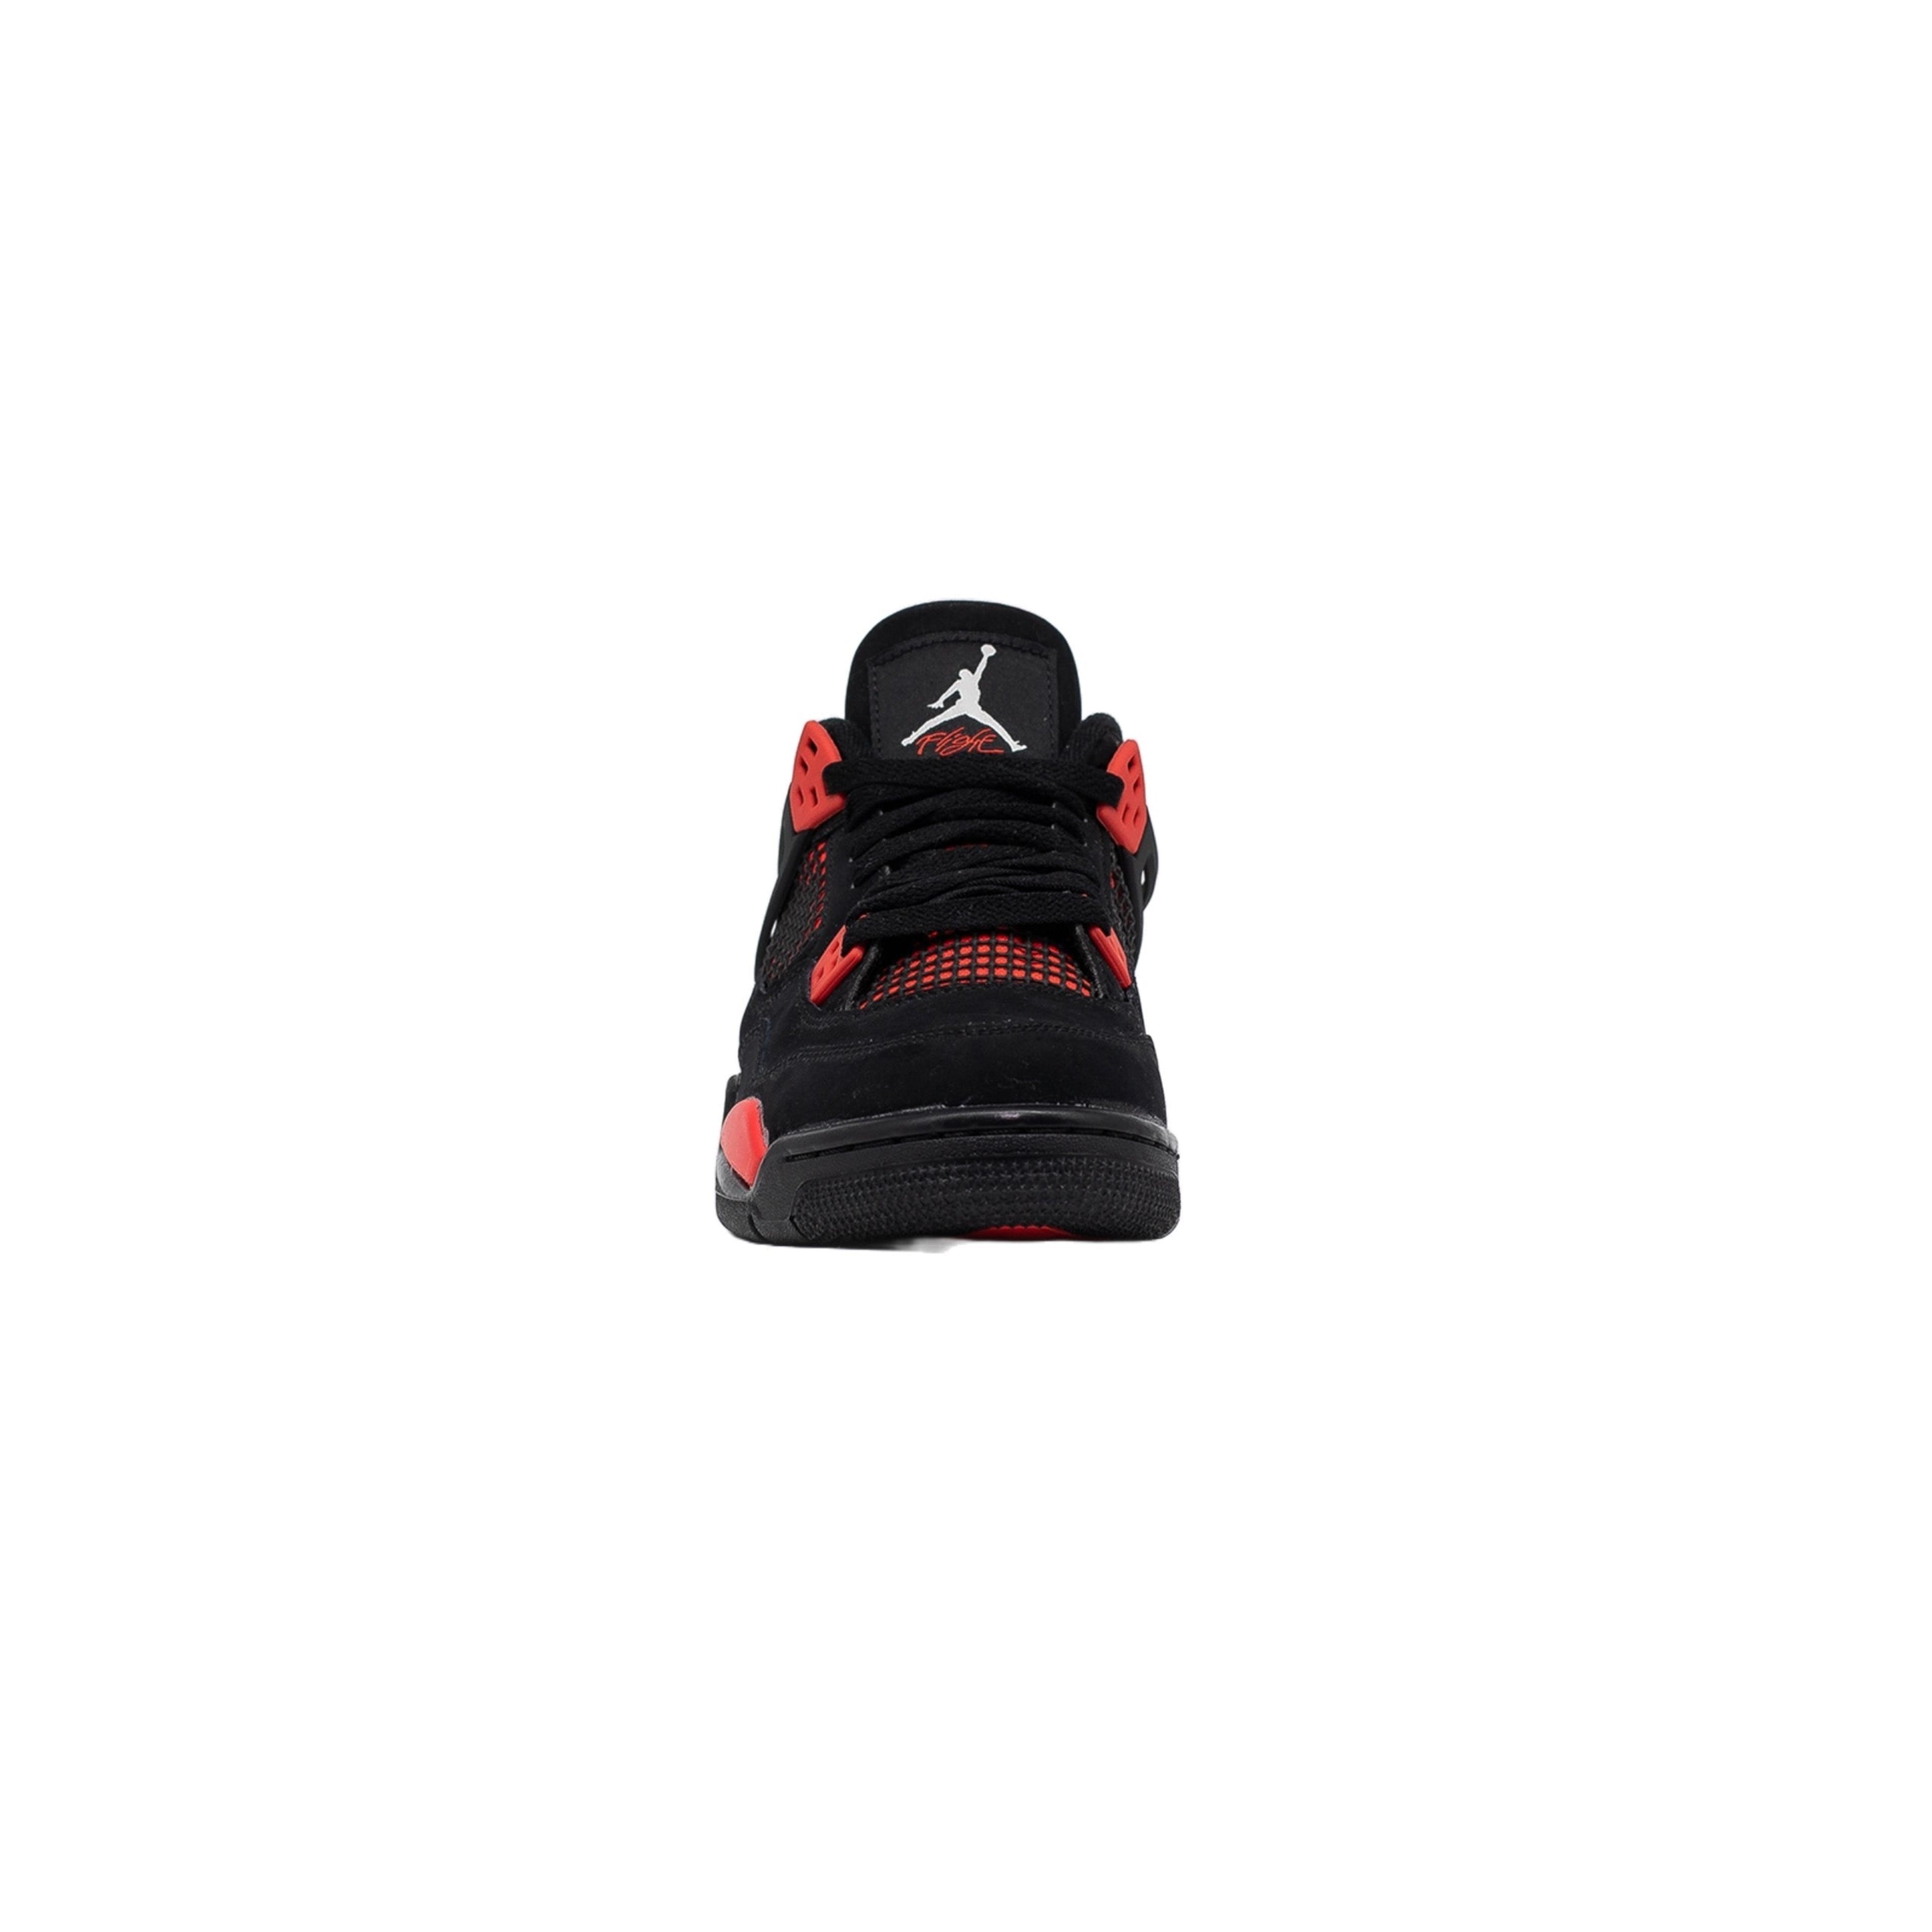 Alternate View 3 of Air Jordan 4, Red Thunder